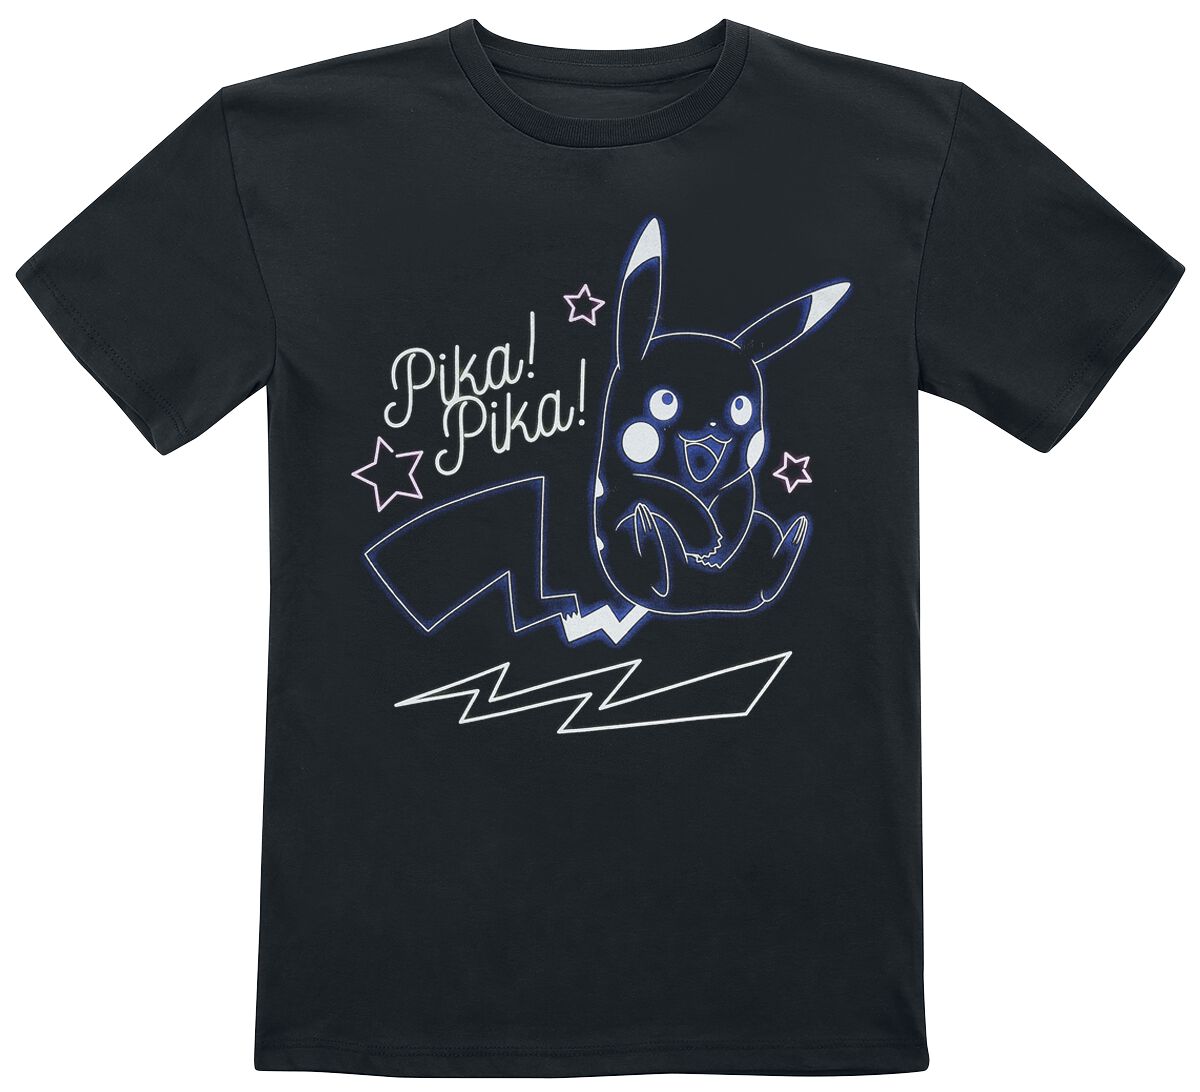 Pokémon Kids - Pikachu - Pika! Pika! Neon T-Shirt black